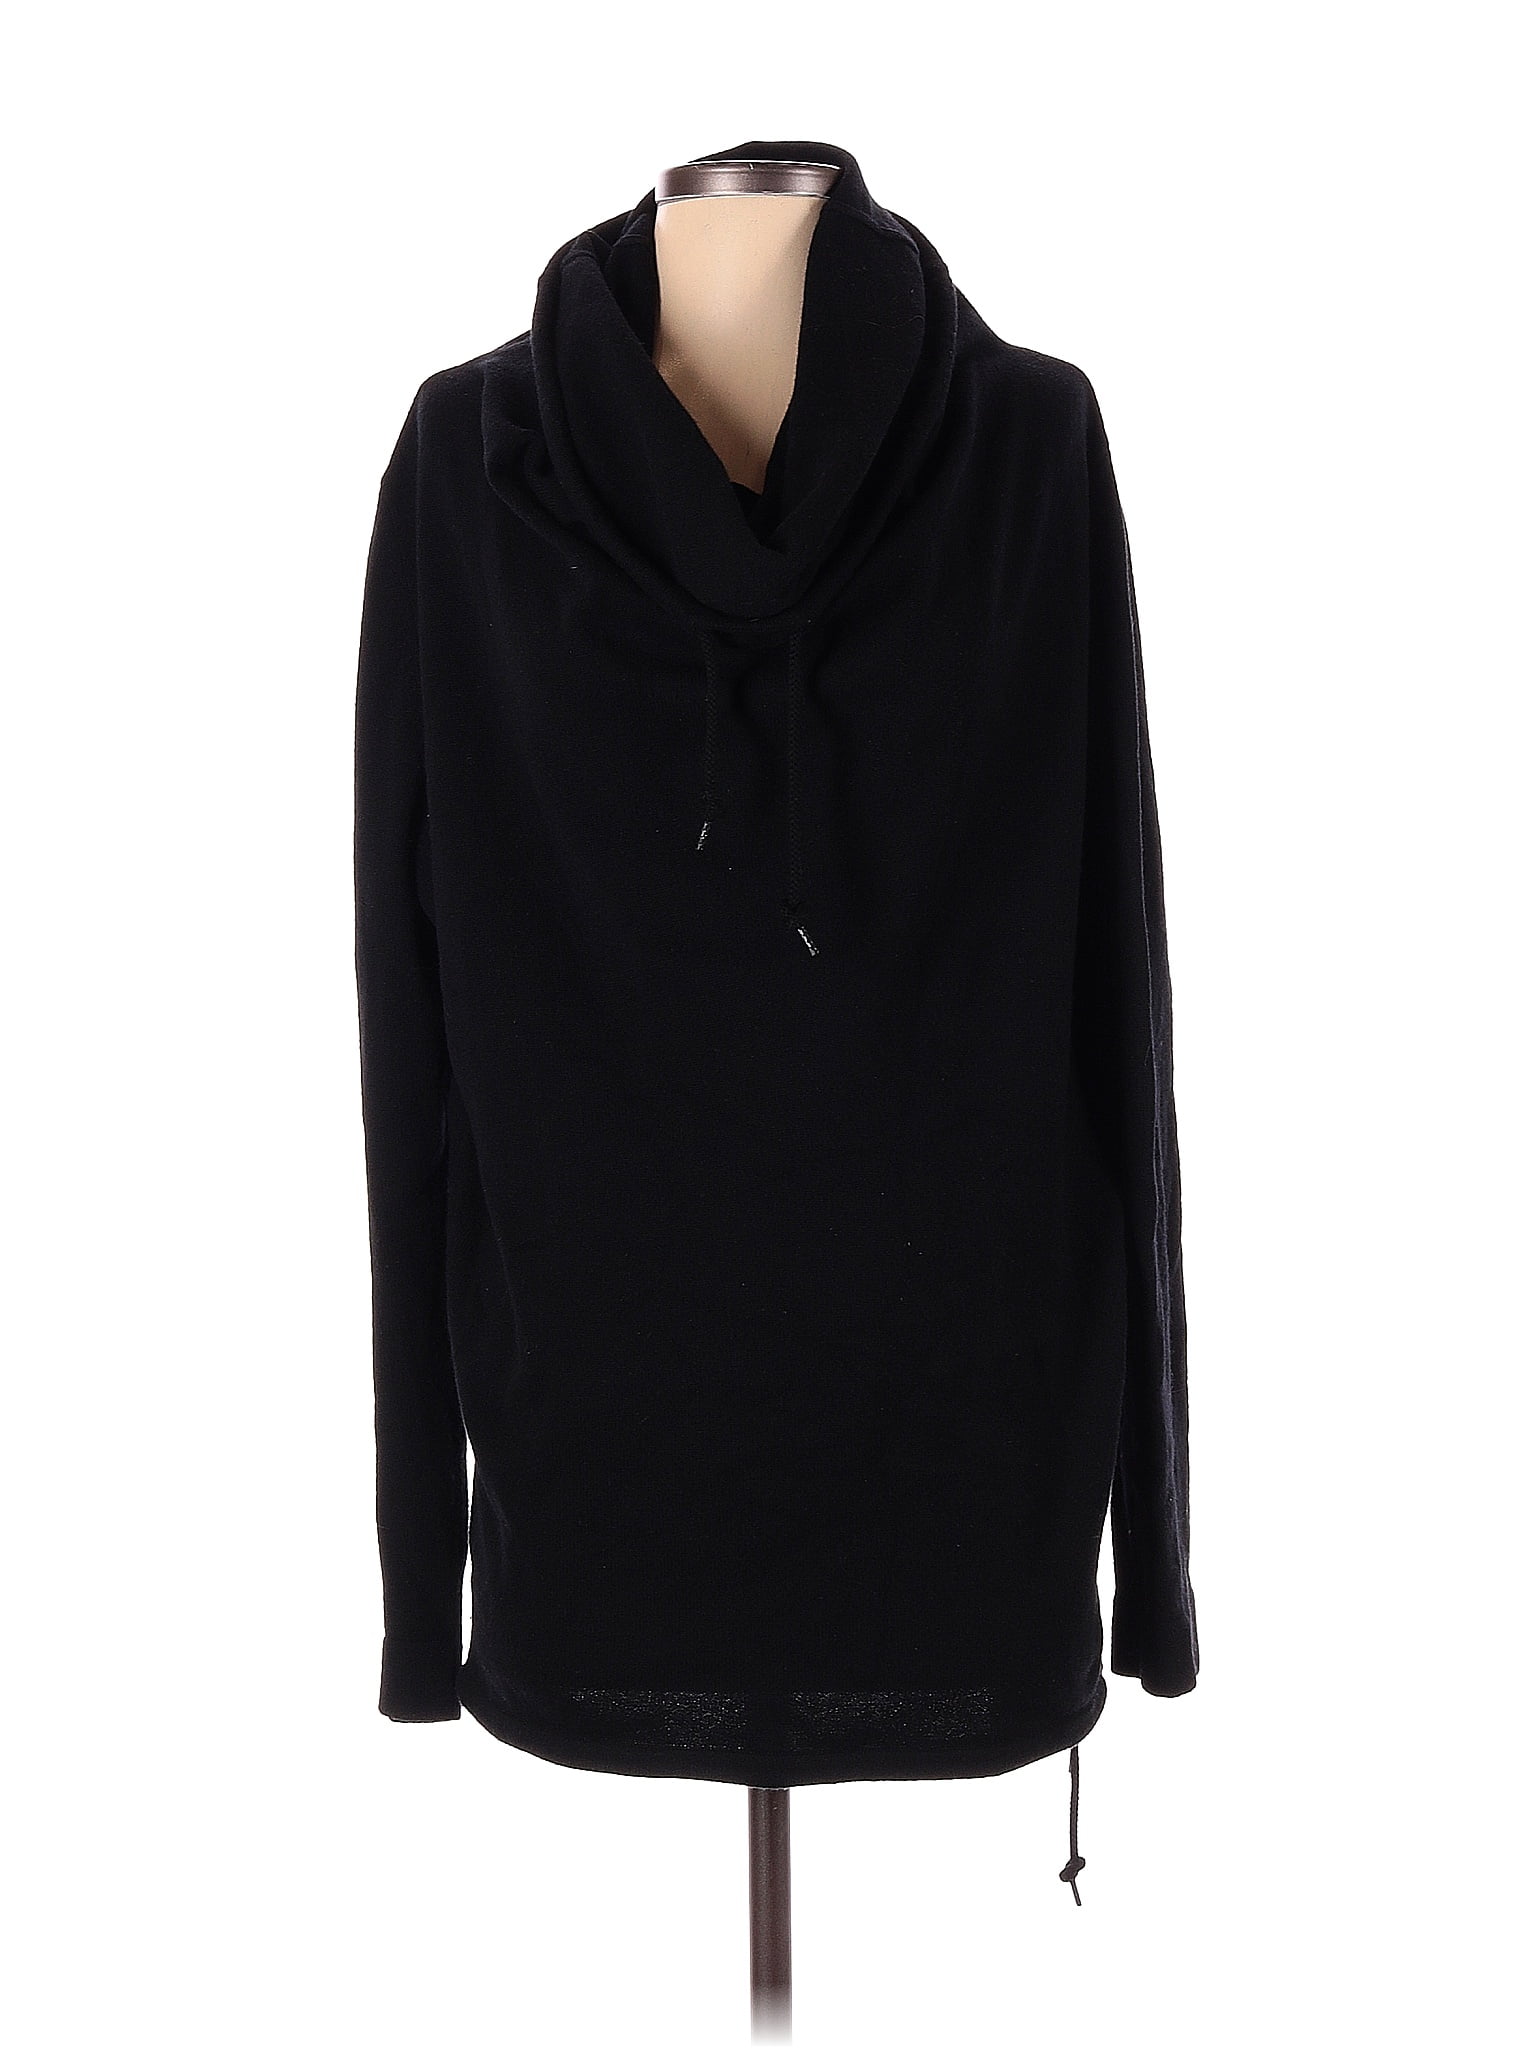 Punto 4 | Black Akris Pullover thredUP Sweater 84% Size - off